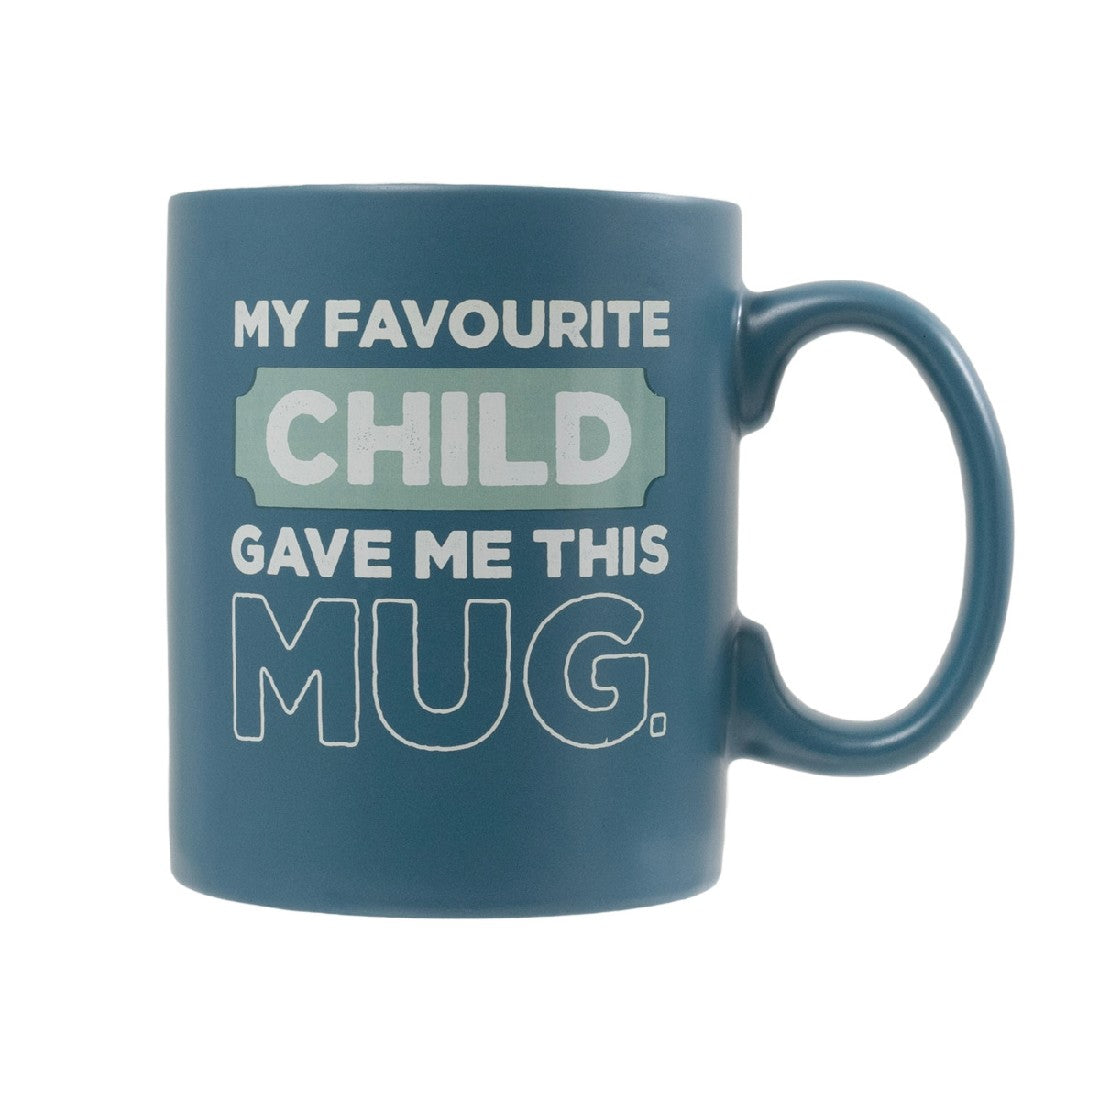 Mugs For Him